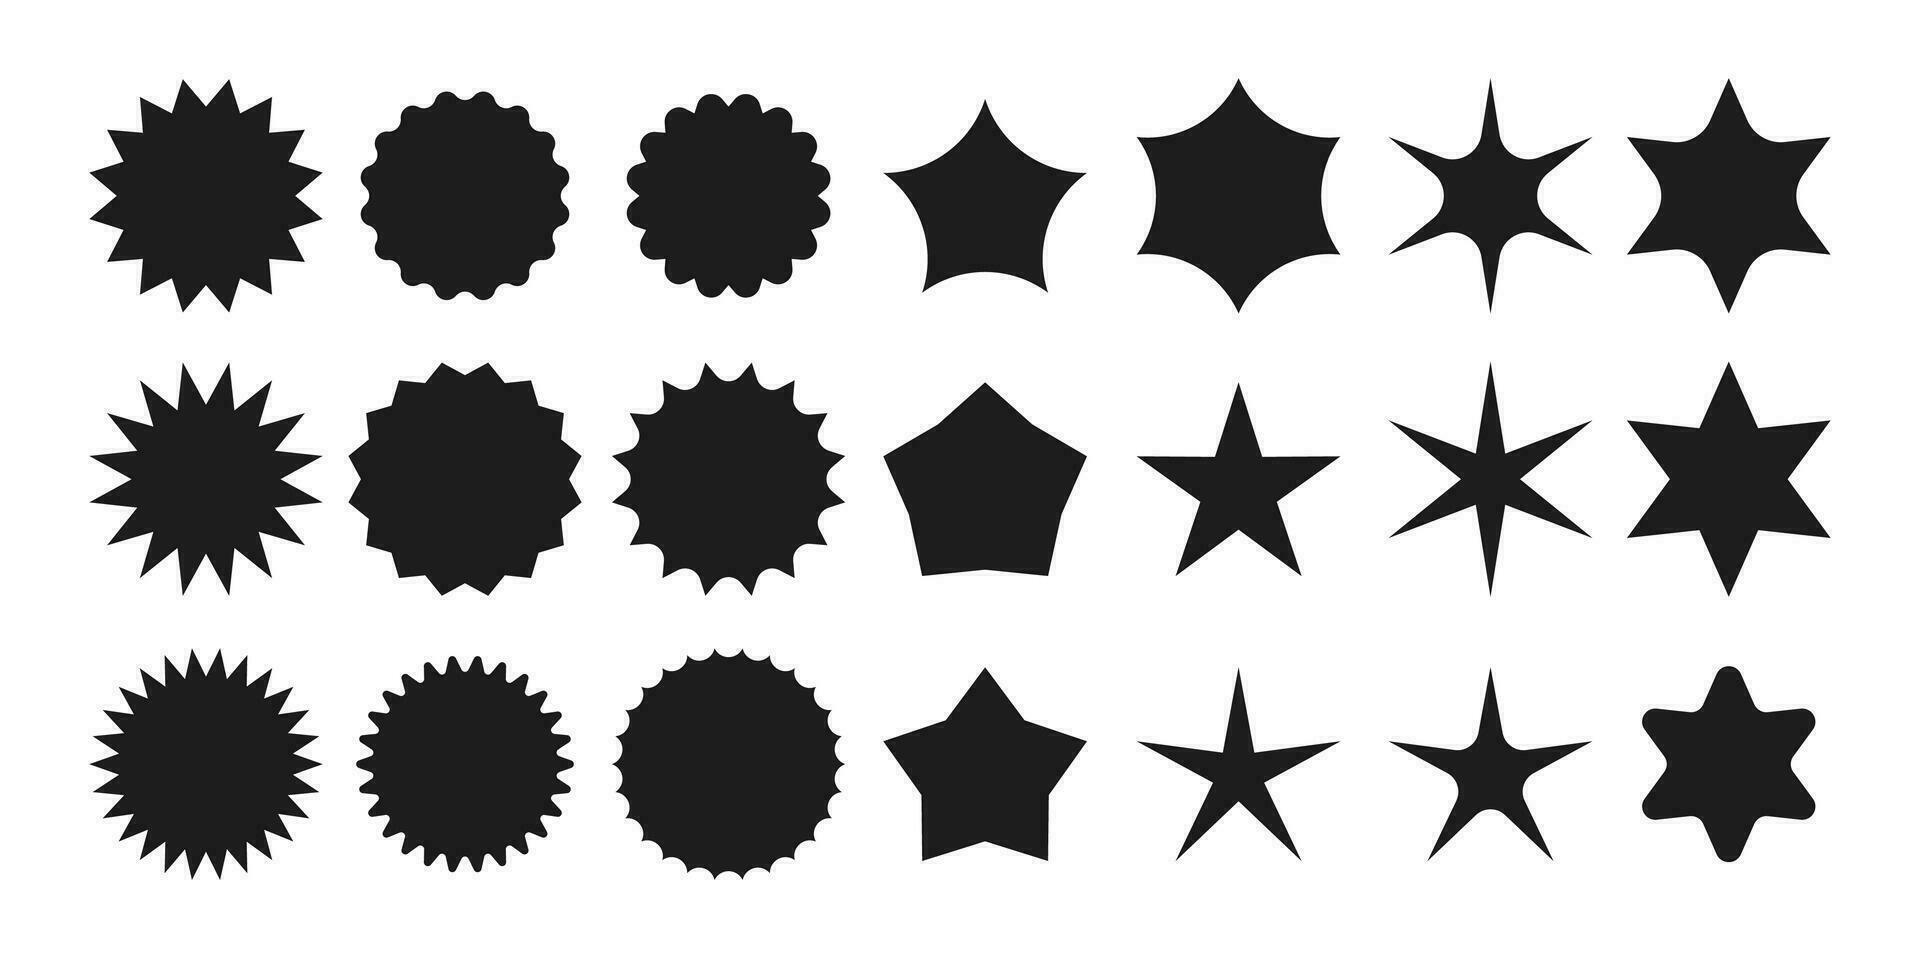 Set of vector starburst, sunburst badges. Black icons on white background. Simple flat style vintage labels, stickers.